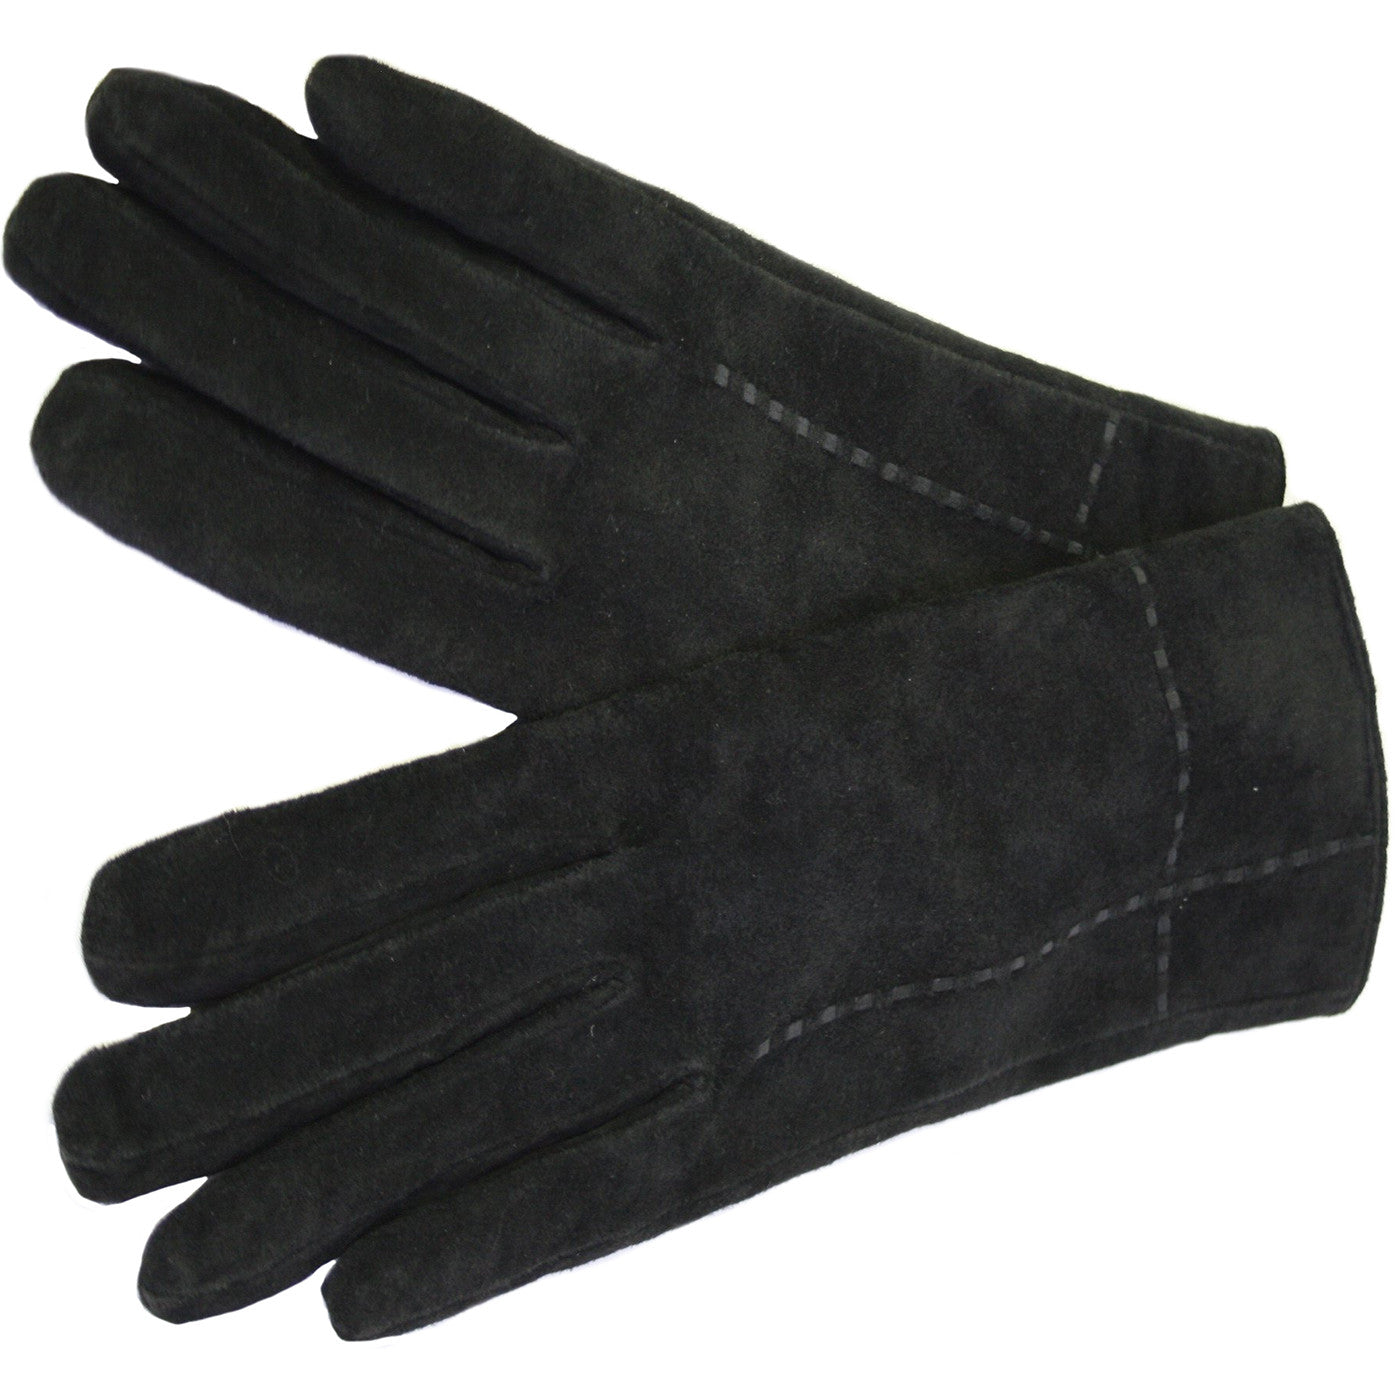 Sheer Bliss Suede Gloves Black